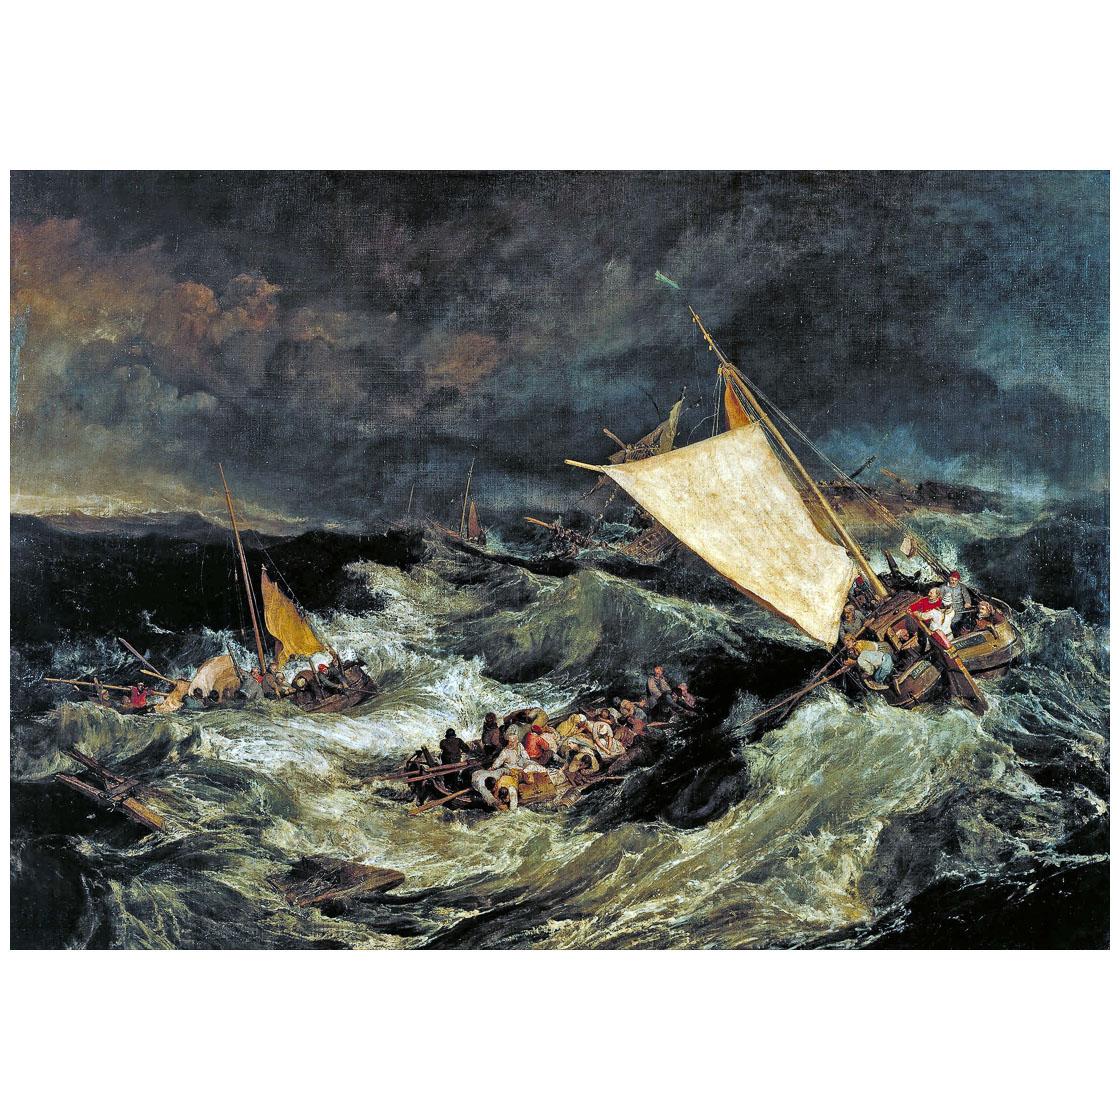 William Turner. The Shipwreck. 1805. Tate Britain